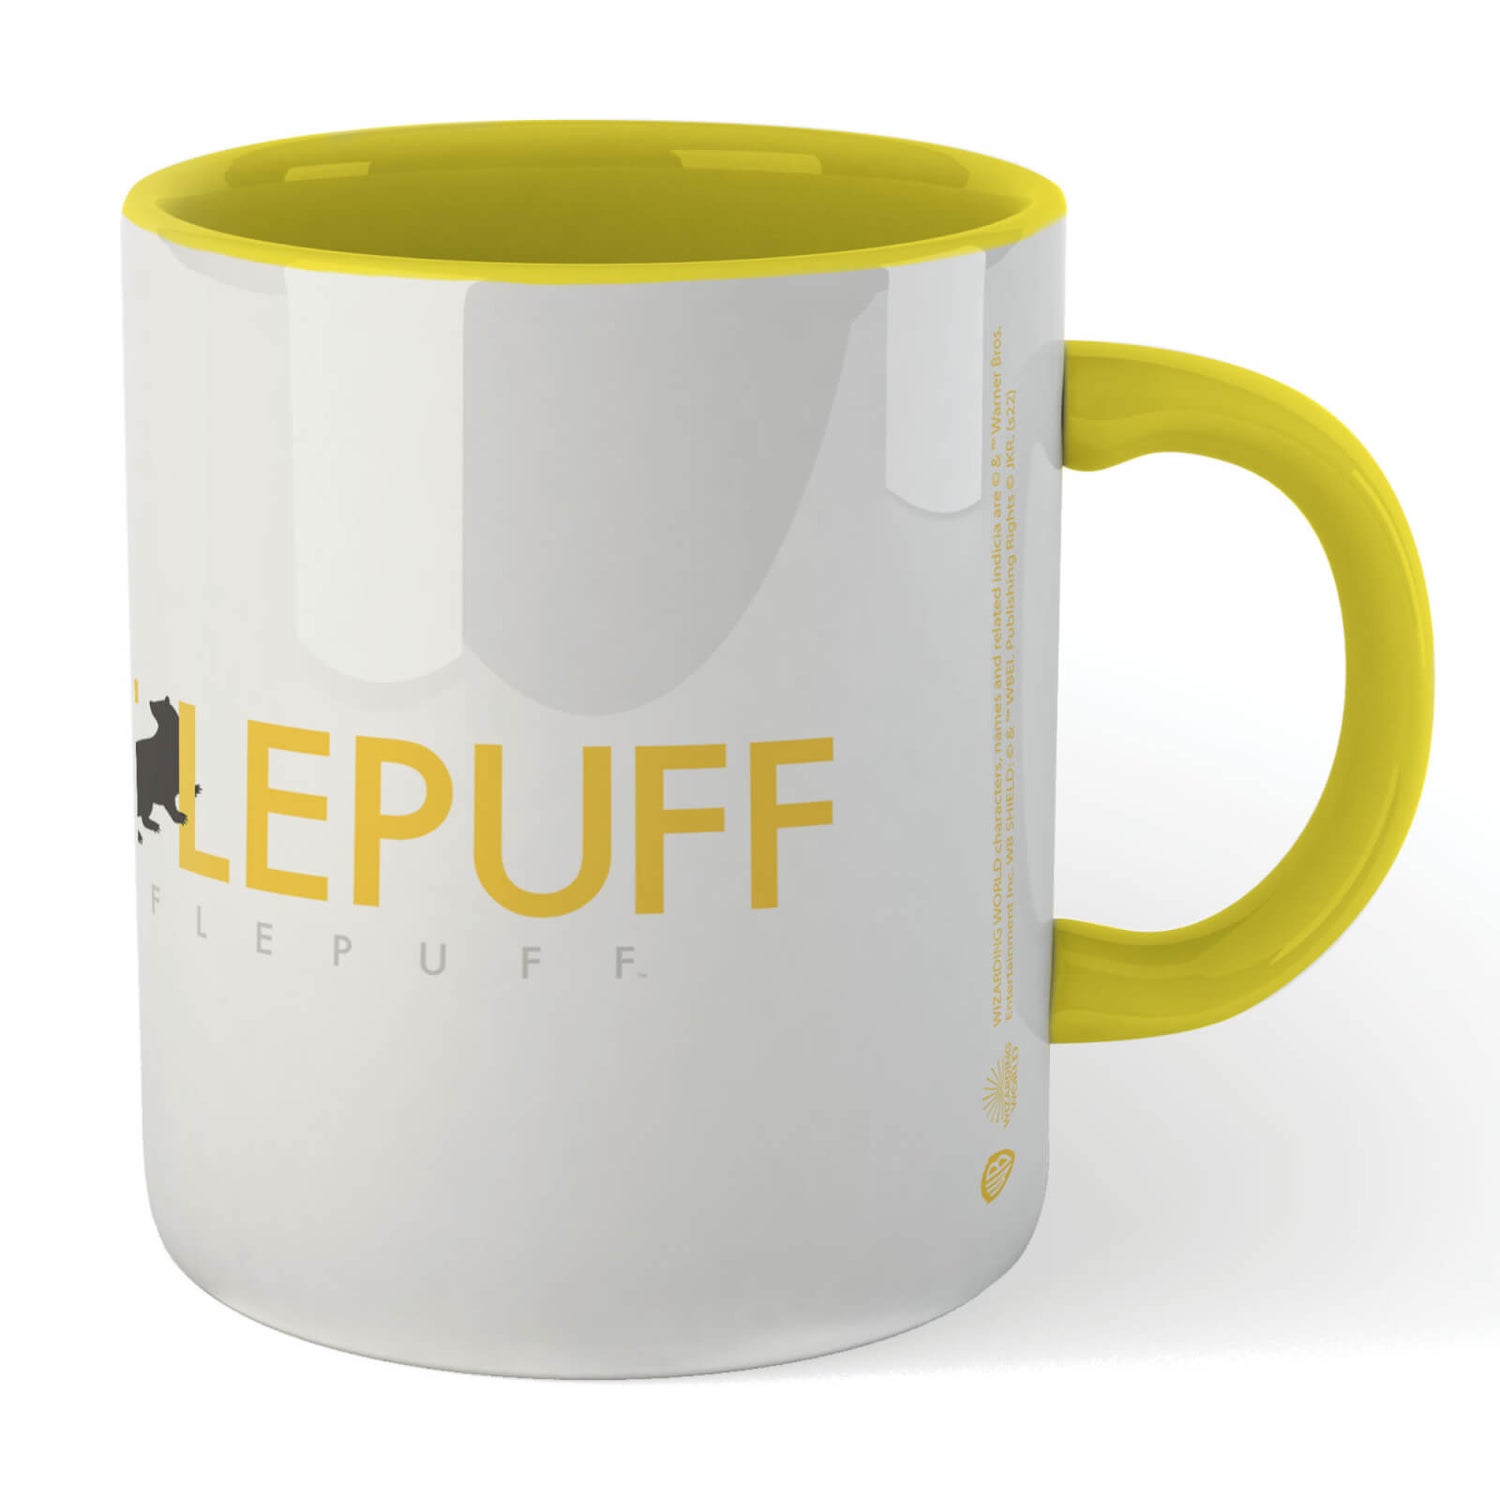 Harry Potter Hufflepuff Mug - Yellow